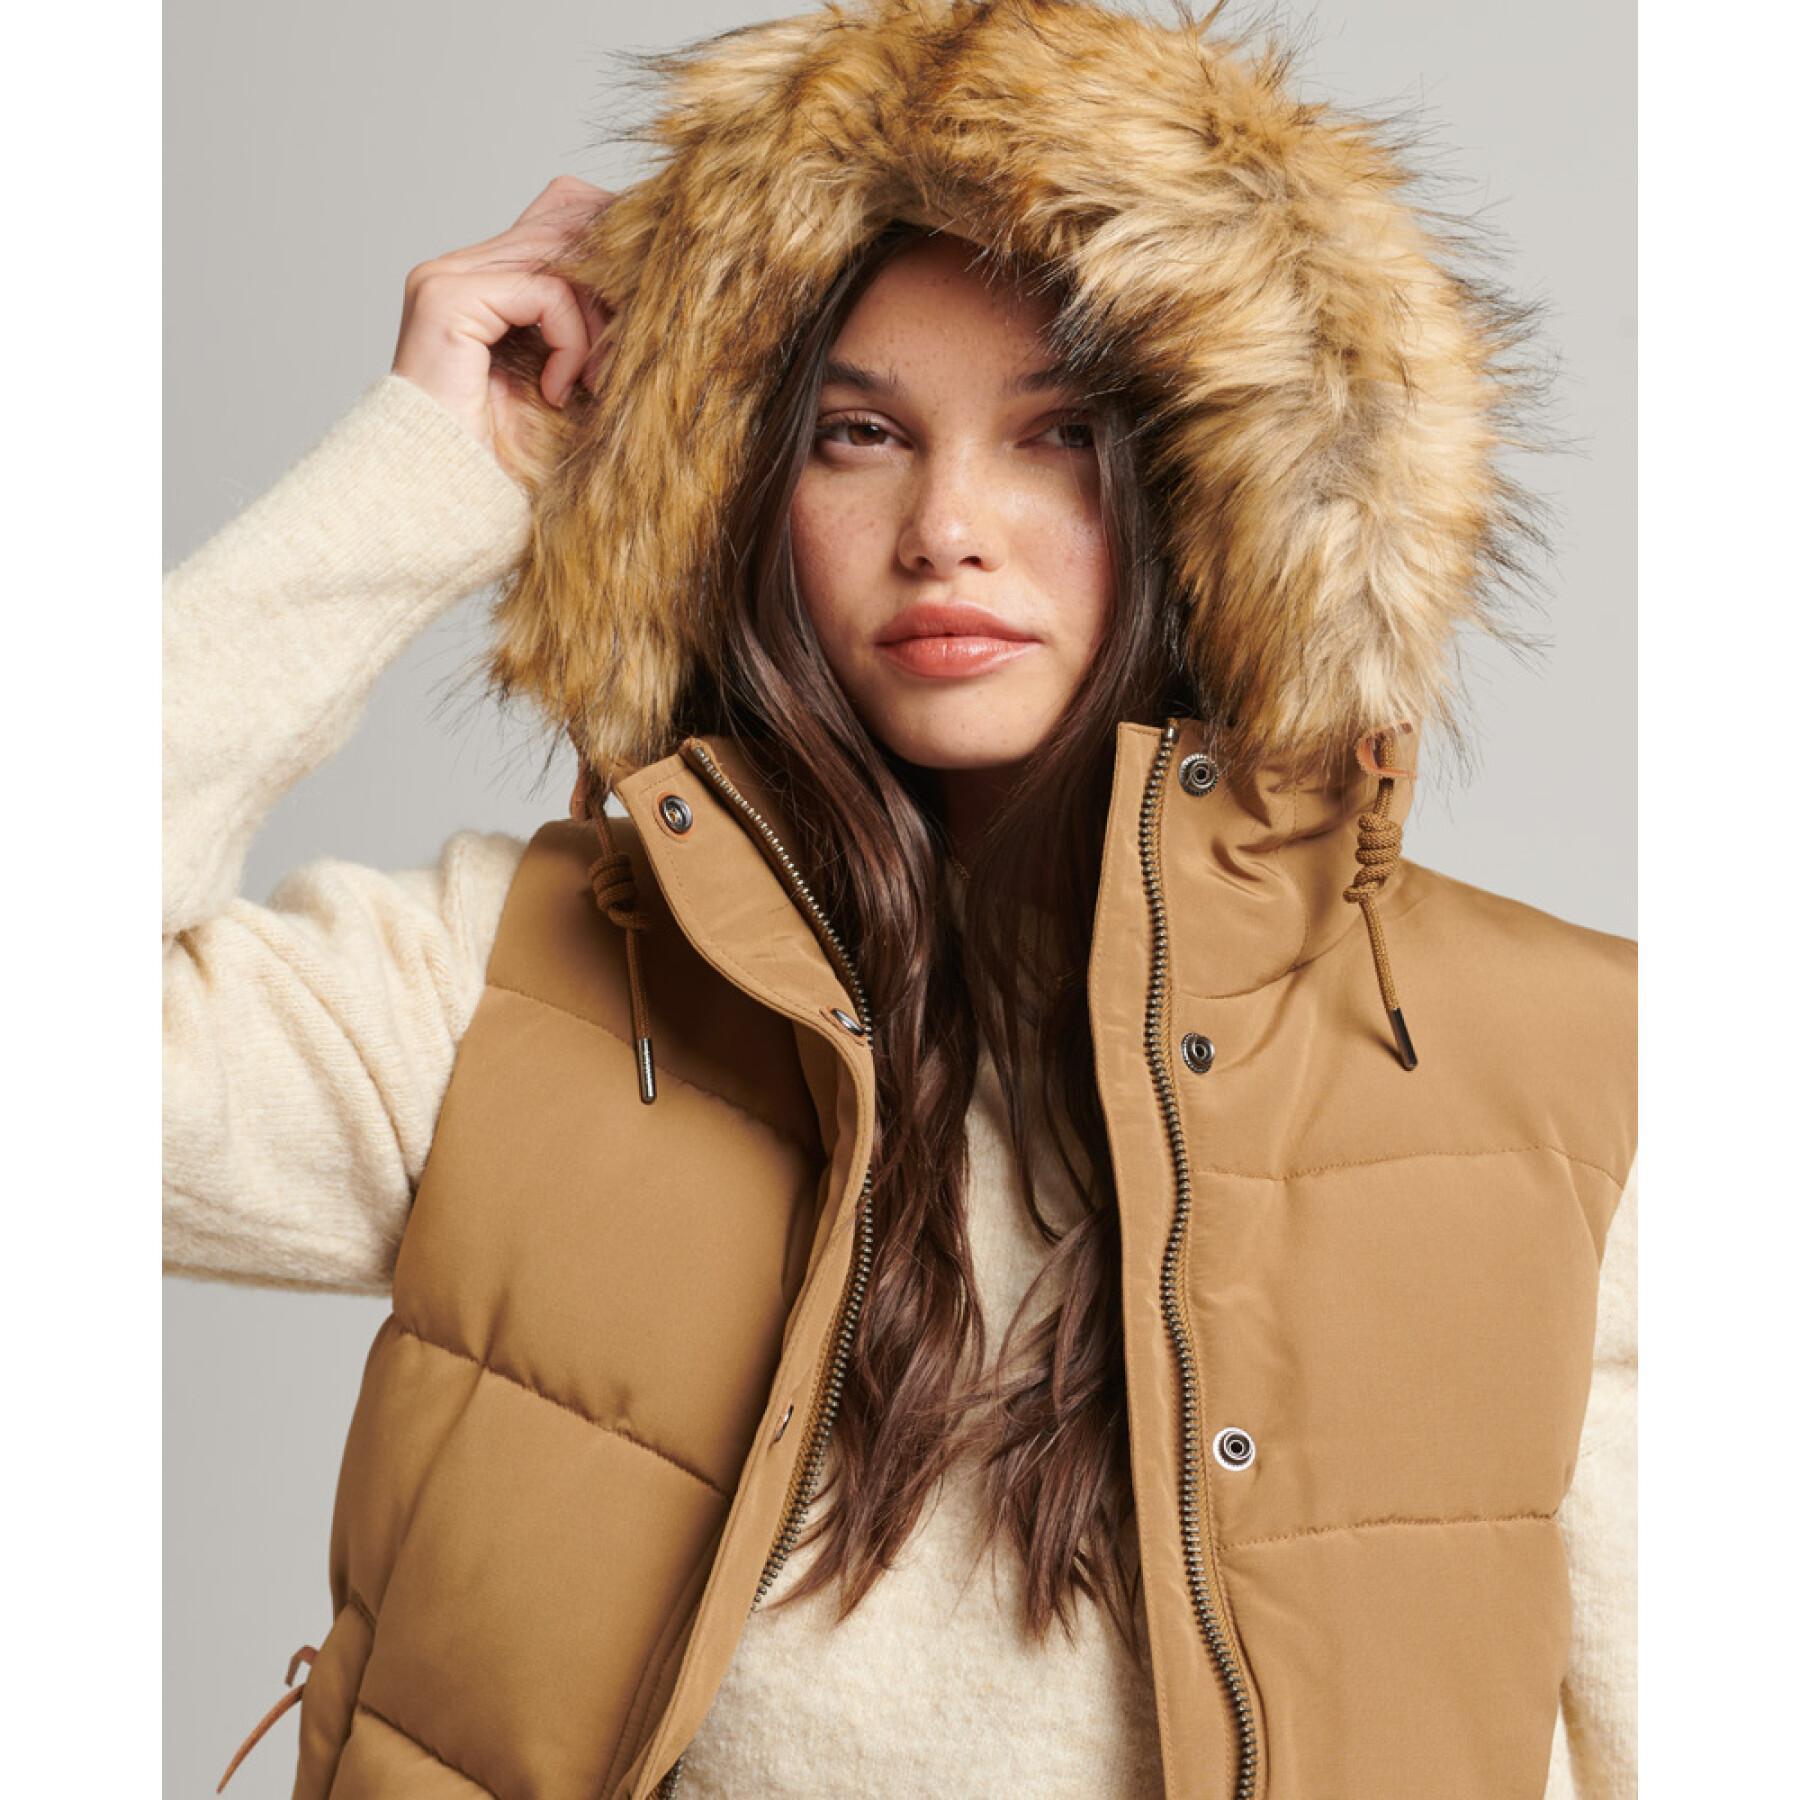 Sleeveless faux fur jacket for women Superdry Everest